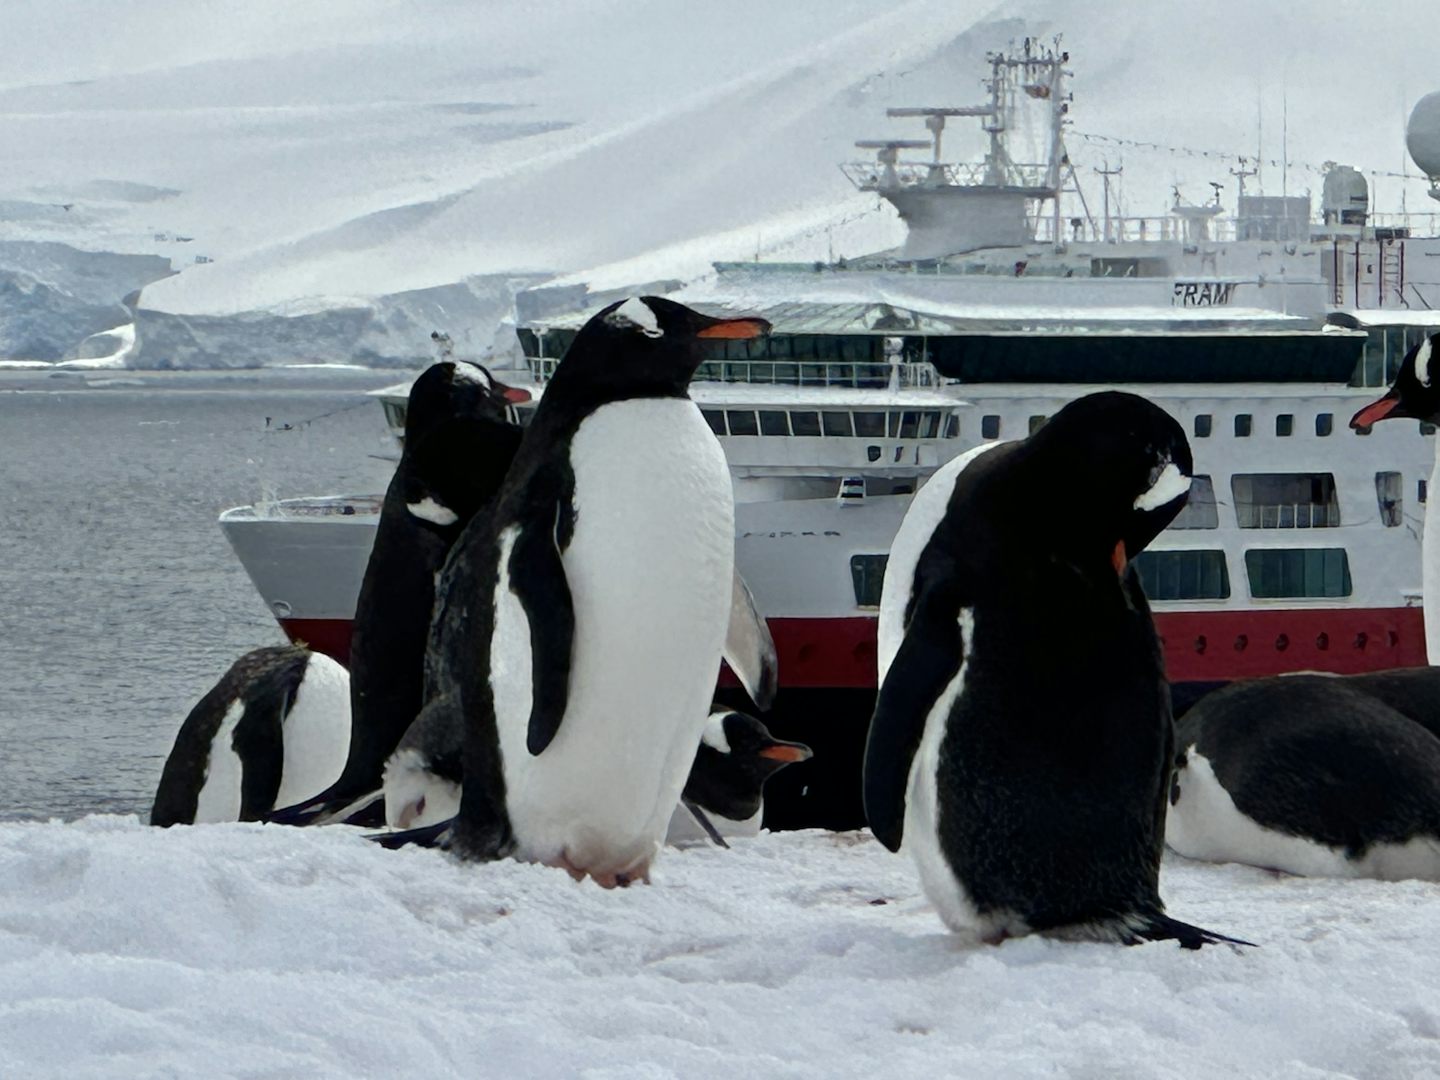 Penguins and ship, Antarctica 